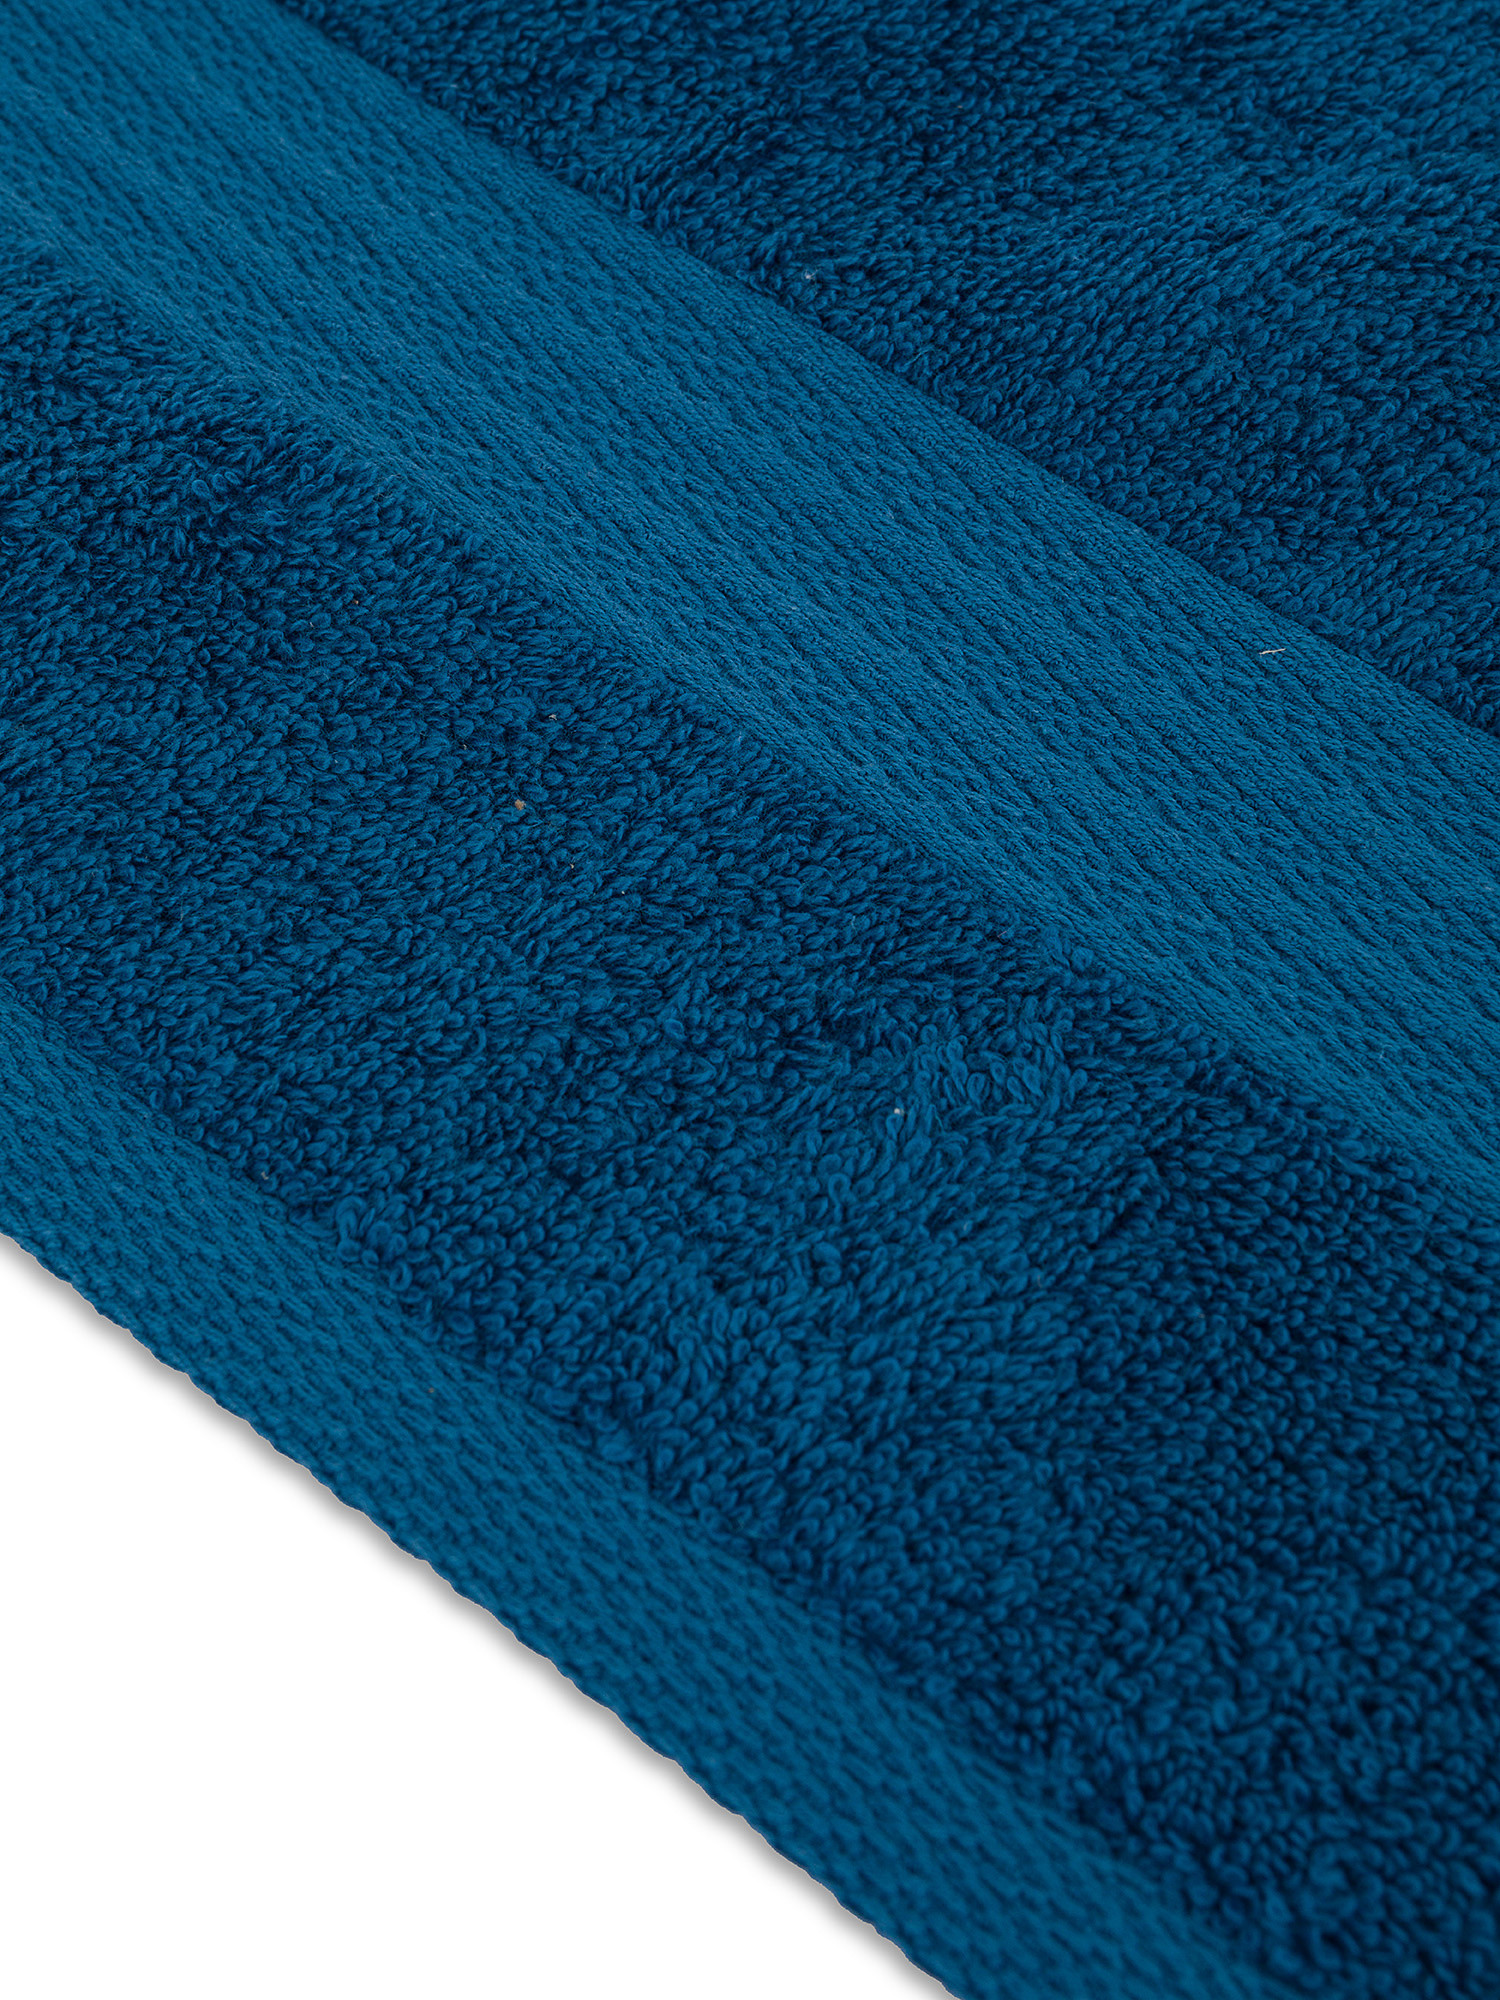 Asciugamano puro cotone tinta unita Zefiro, Blu, large image number 2